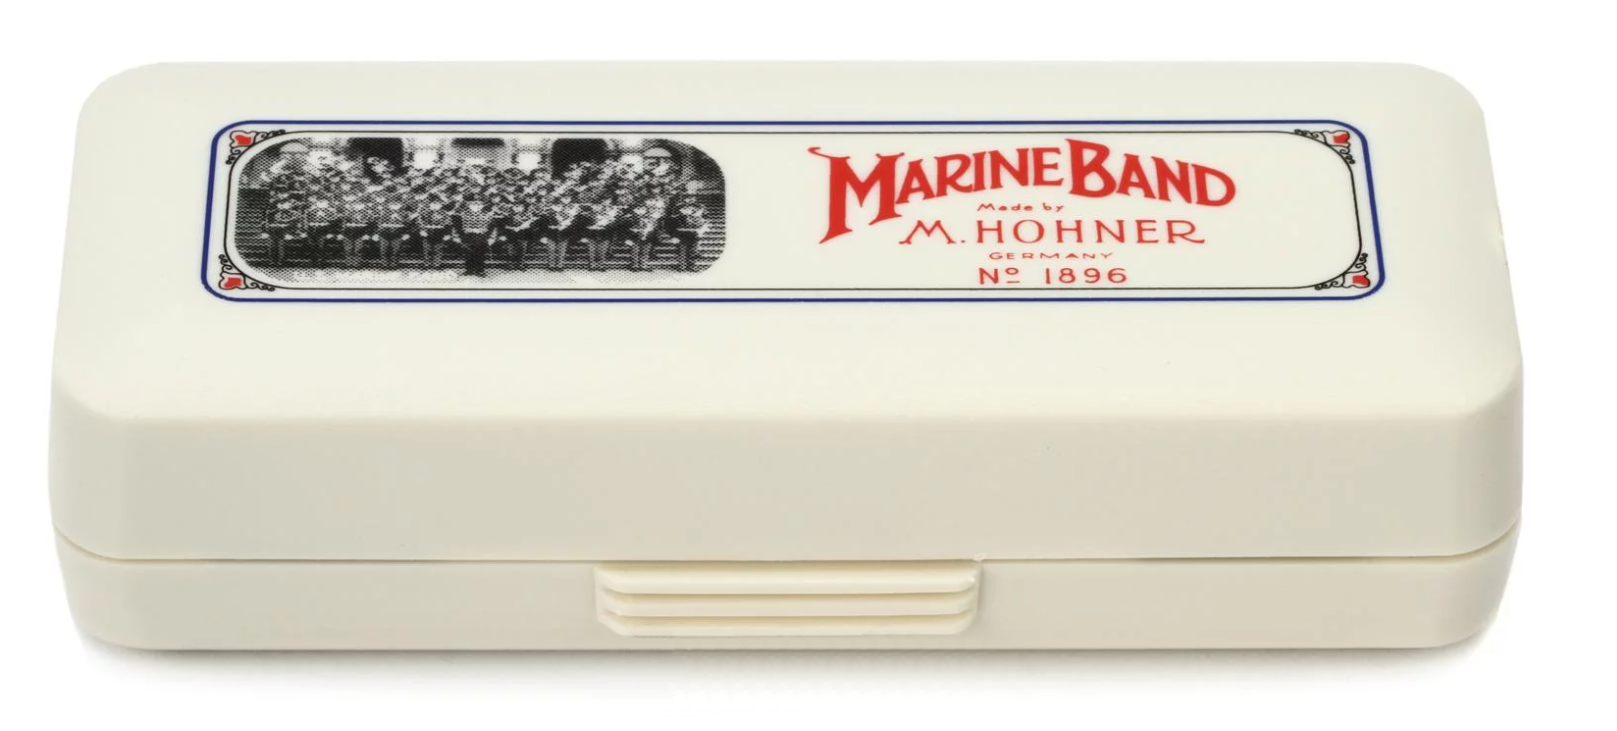 HOHNER  Diatonic Harmonica, Marine Band 1896 - Key of High G (HG)